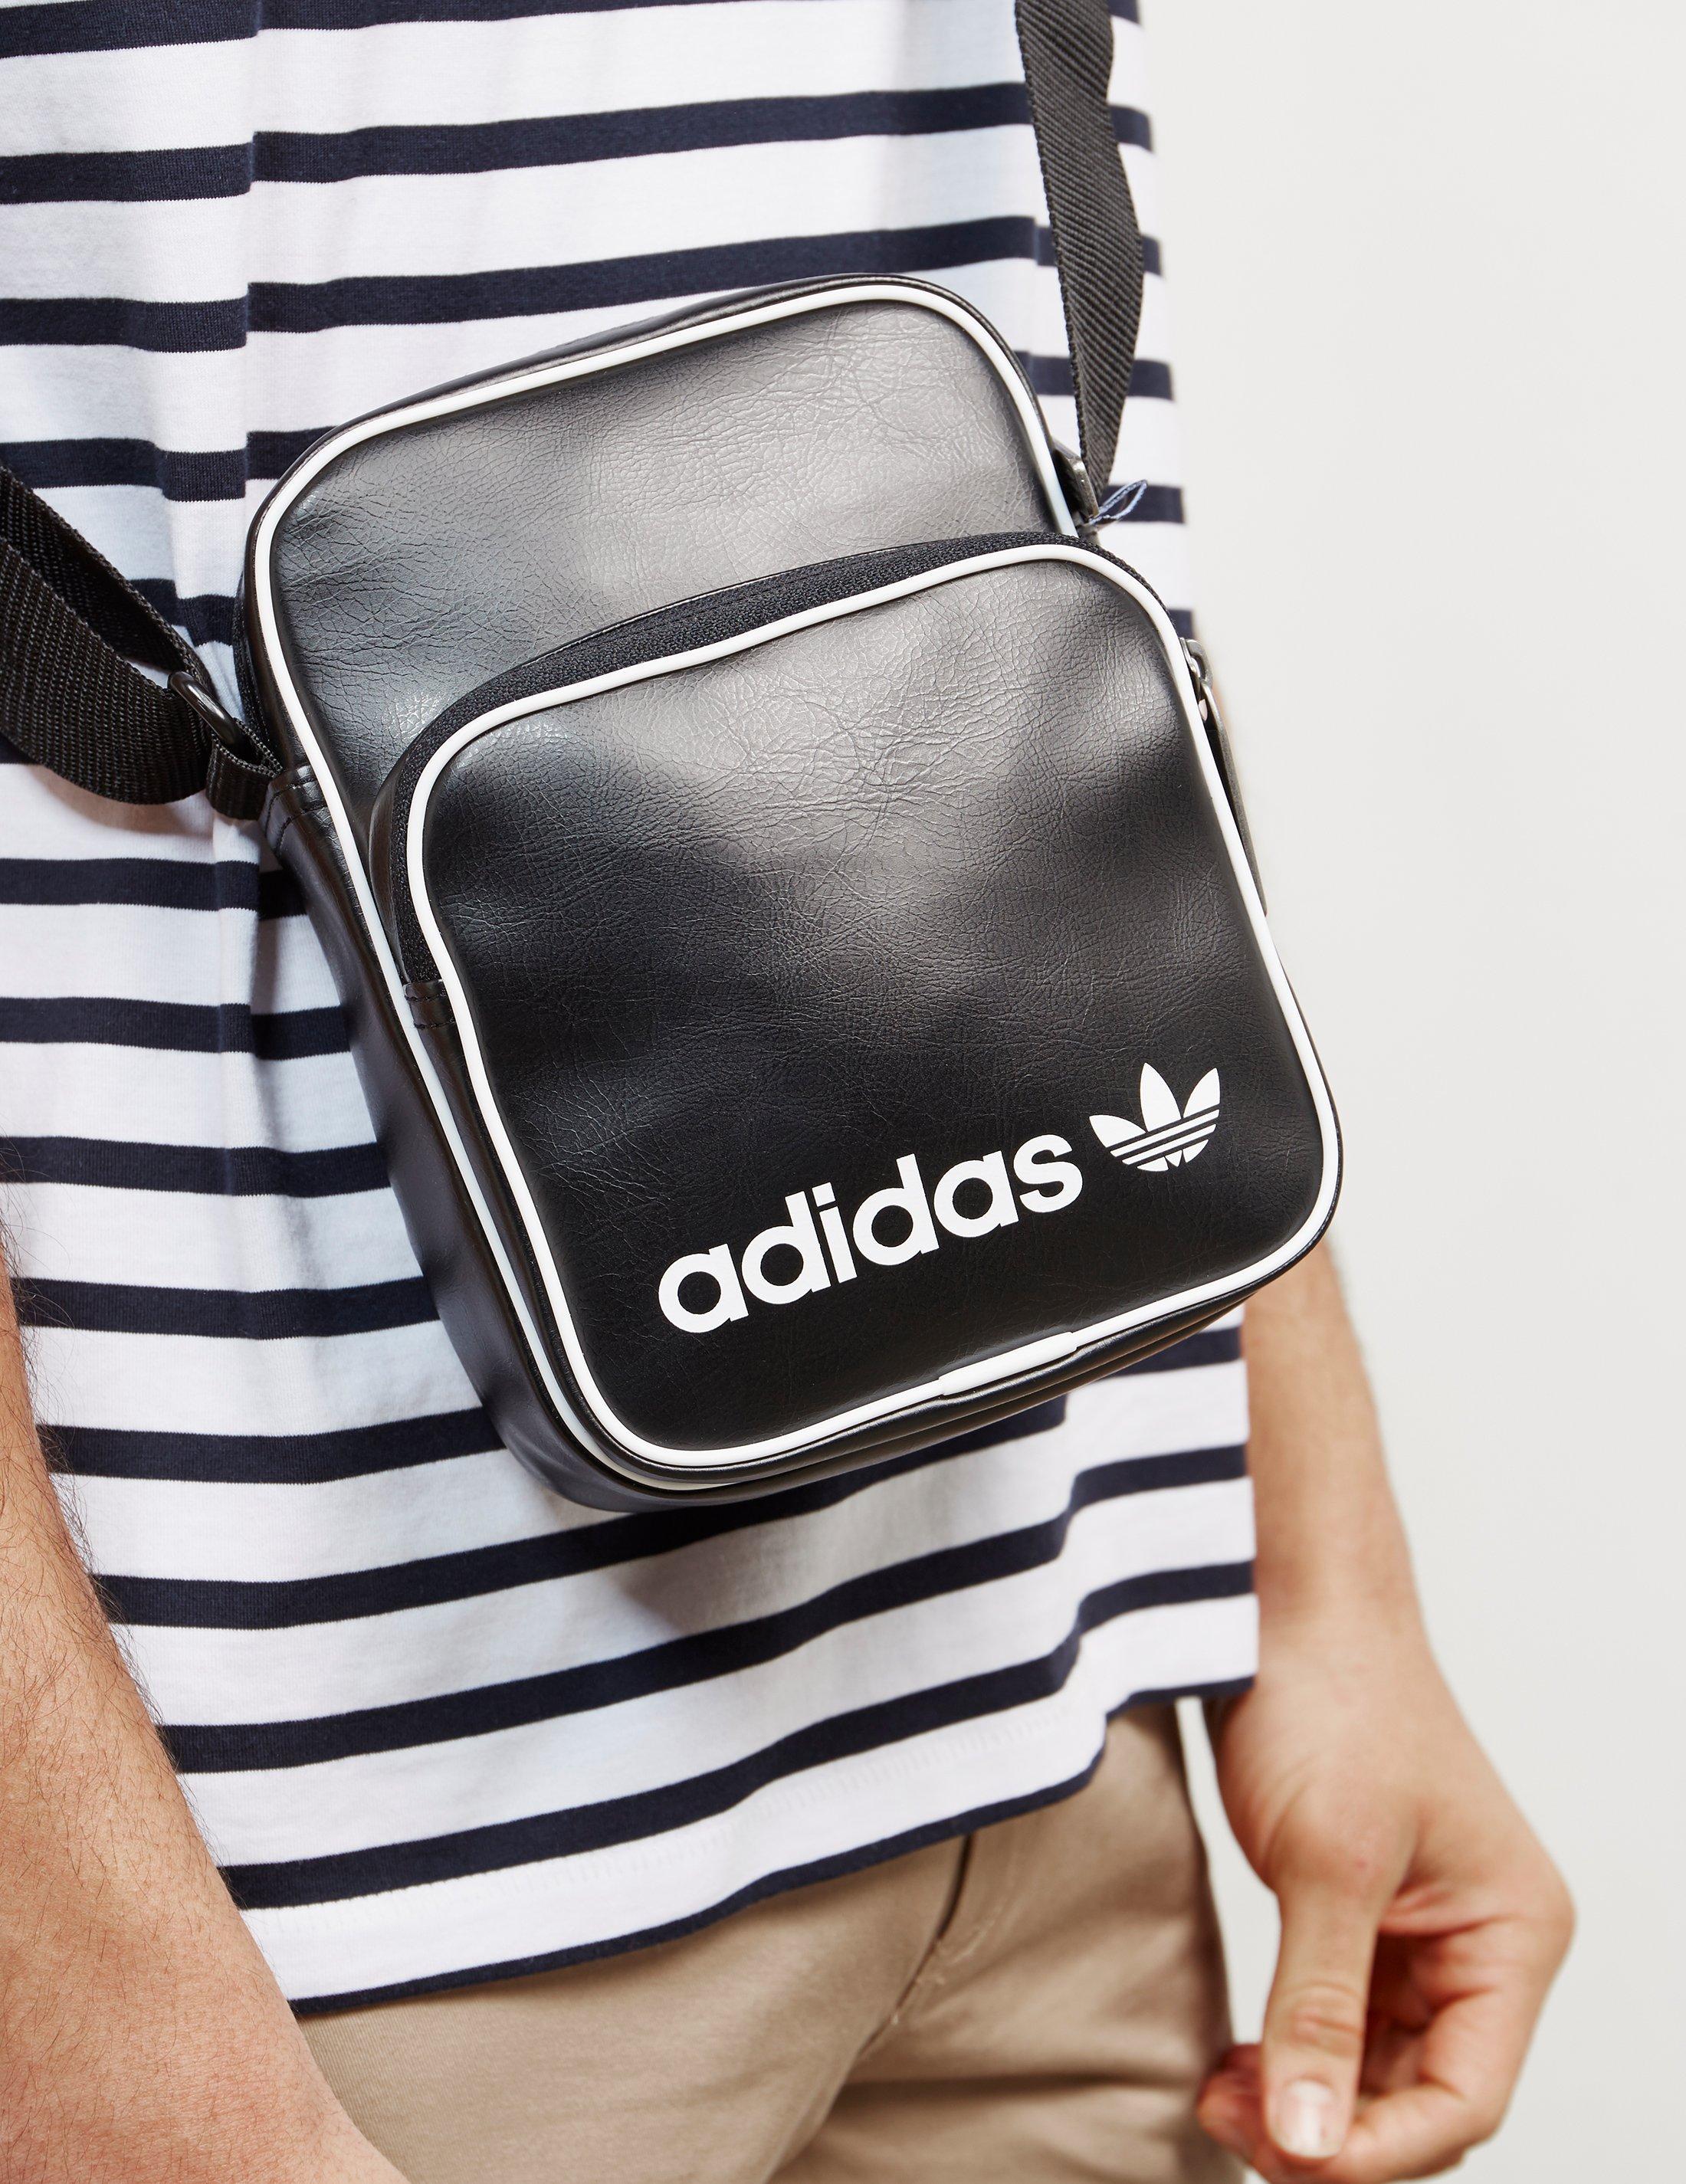 Adidas Original Bags Flash Sales, SAVE 58% - aveclumiere.com